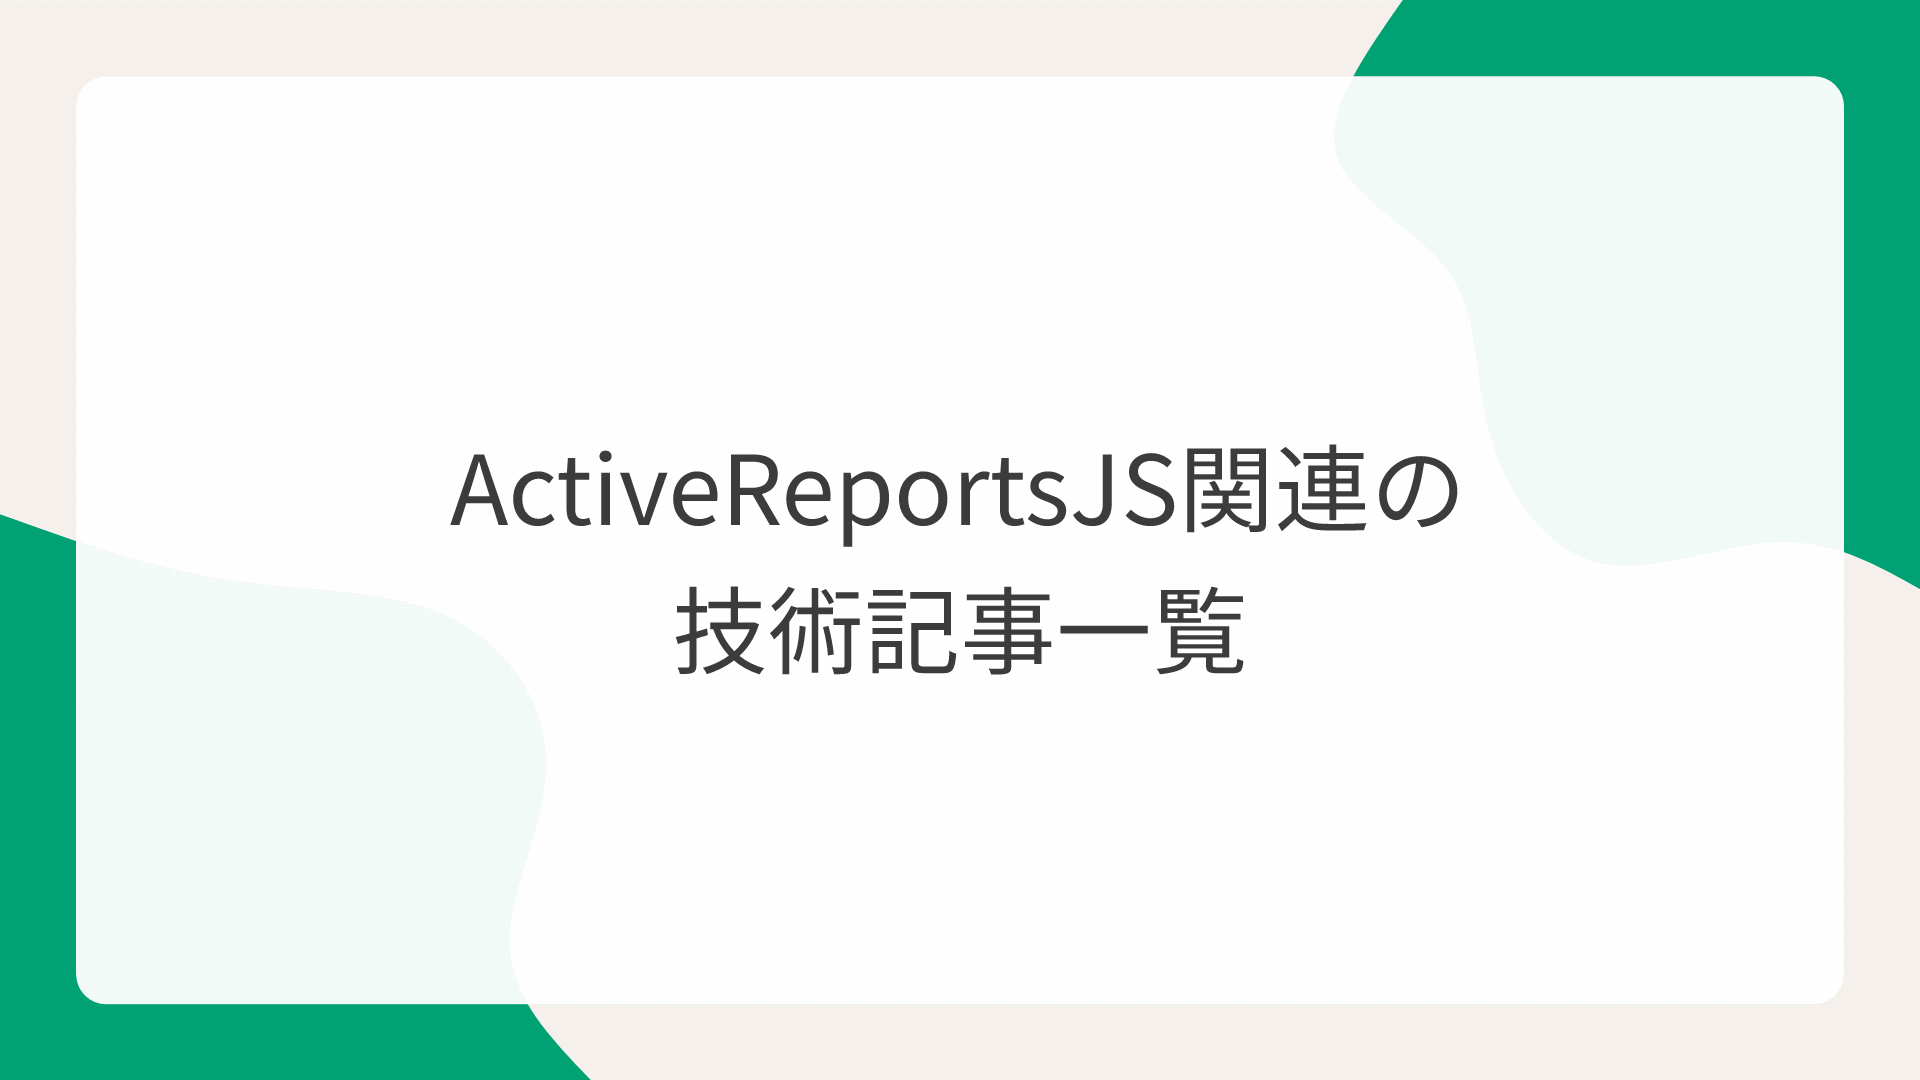 ActiveReportsJS関連の技術記事一覧